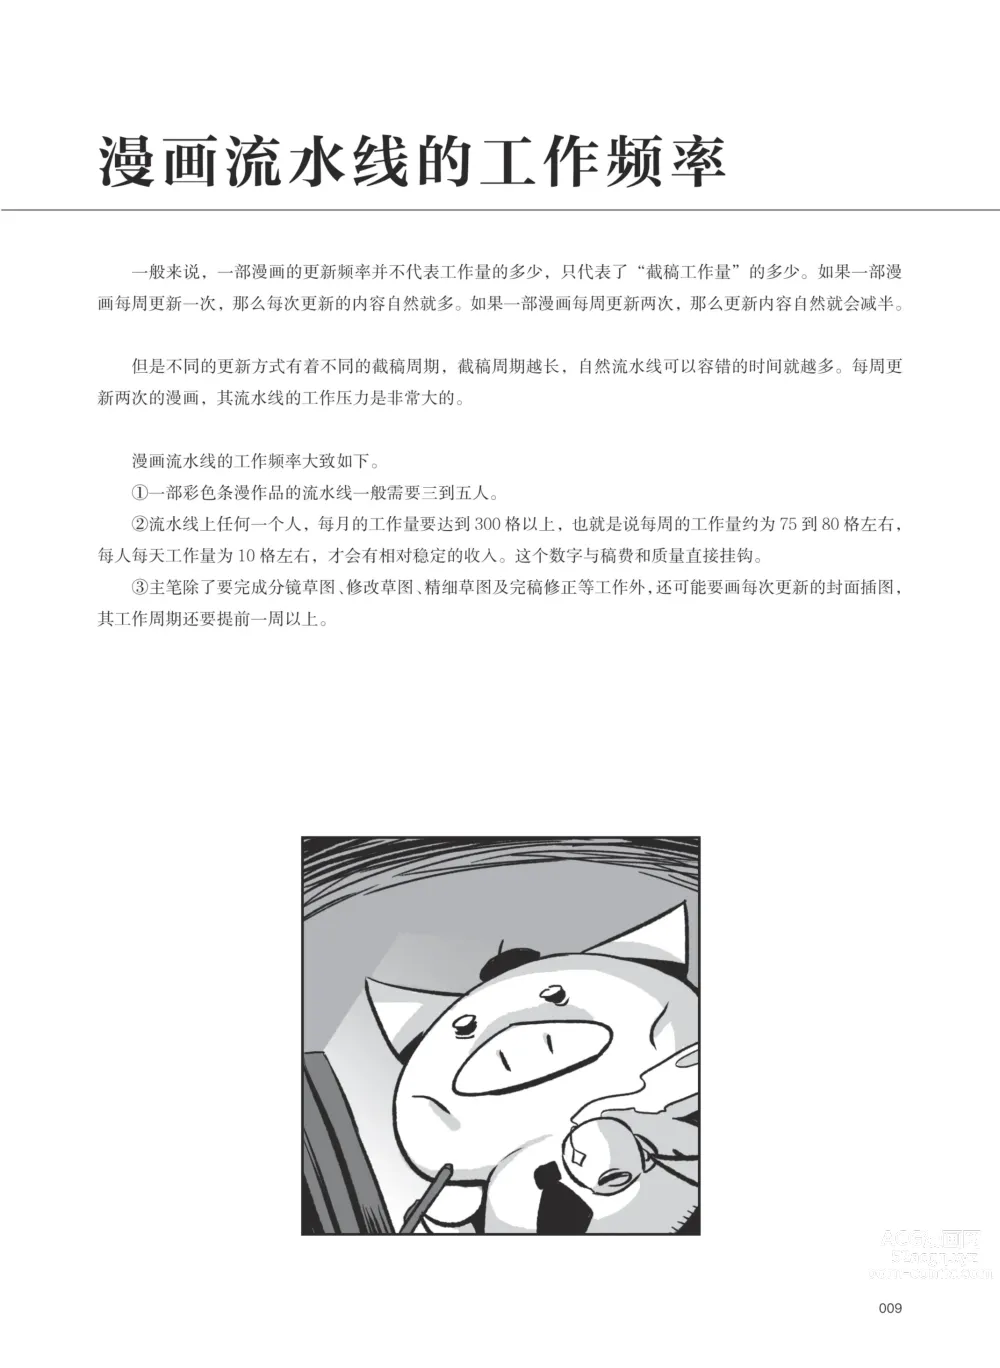 Page 10 of manga 条漫分镜草图本